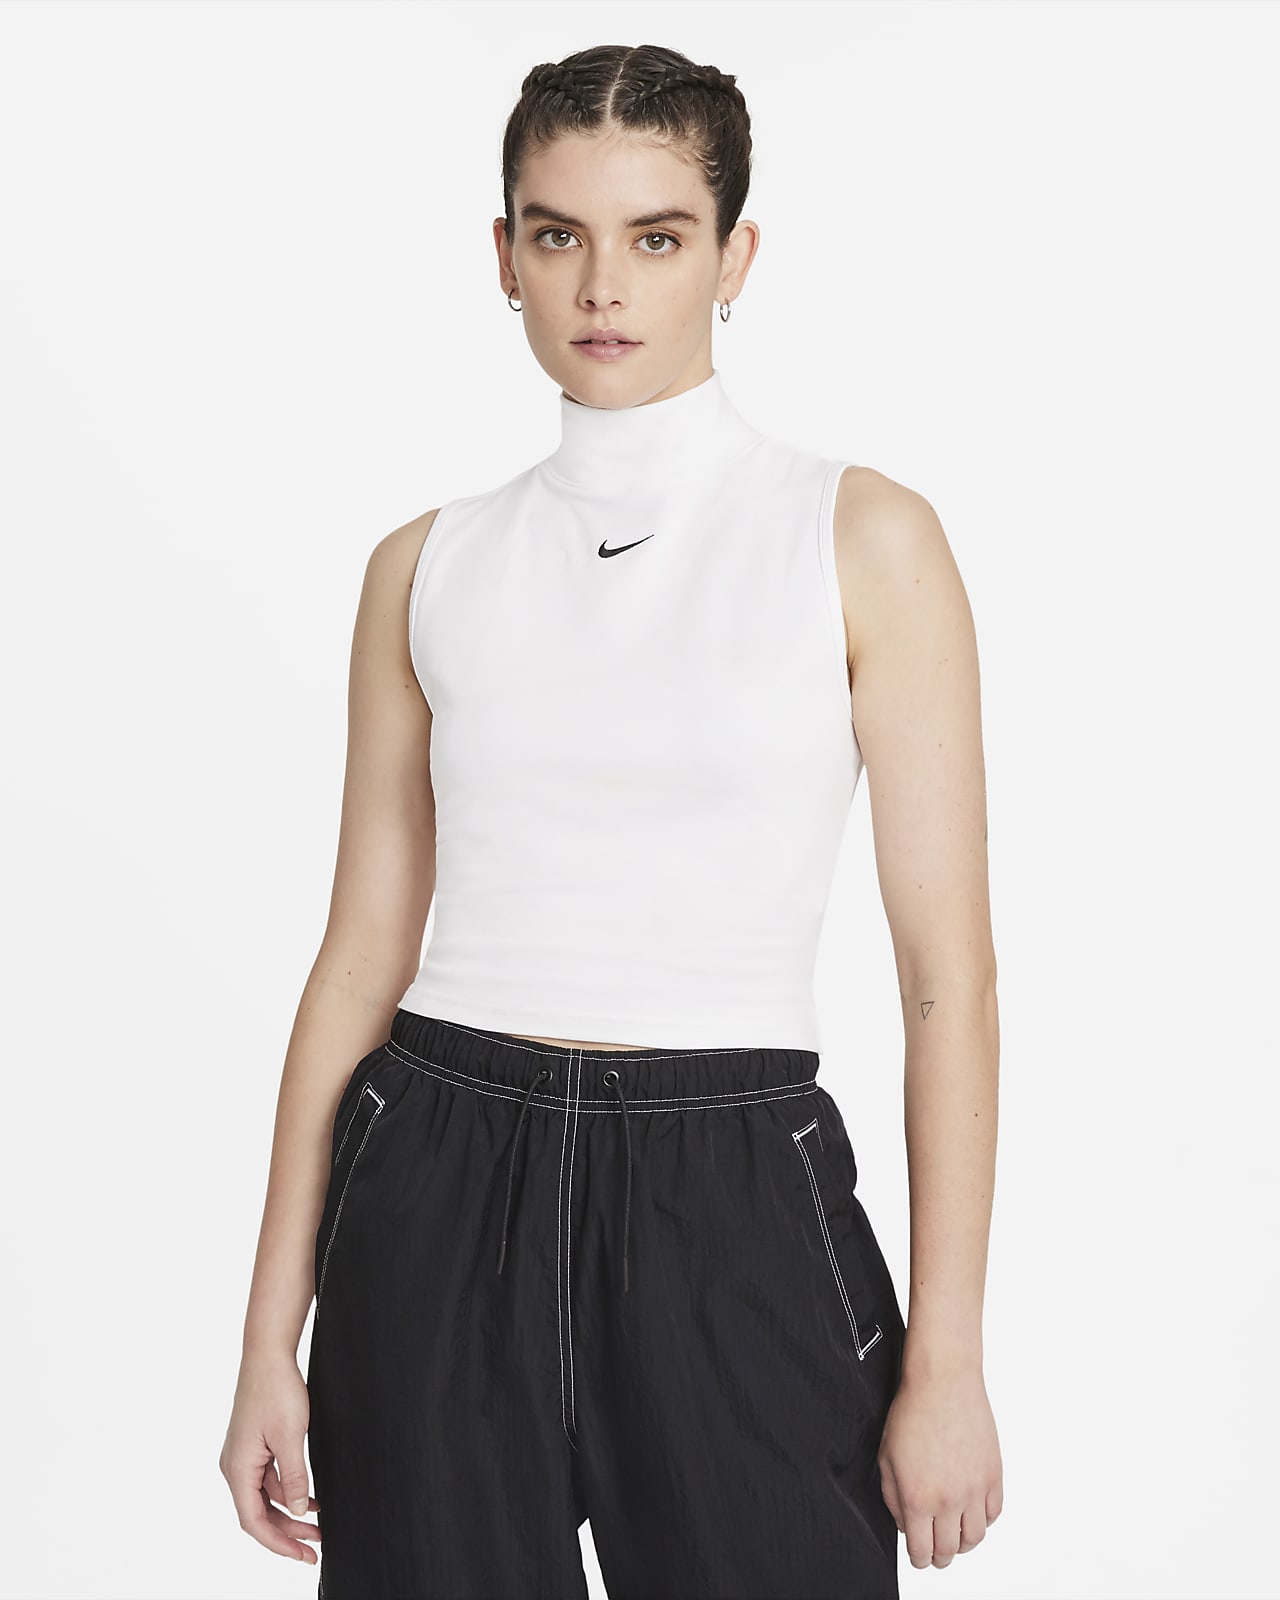 Nike Sportswear Collection Essentials Women's Sleeveless Mock Top